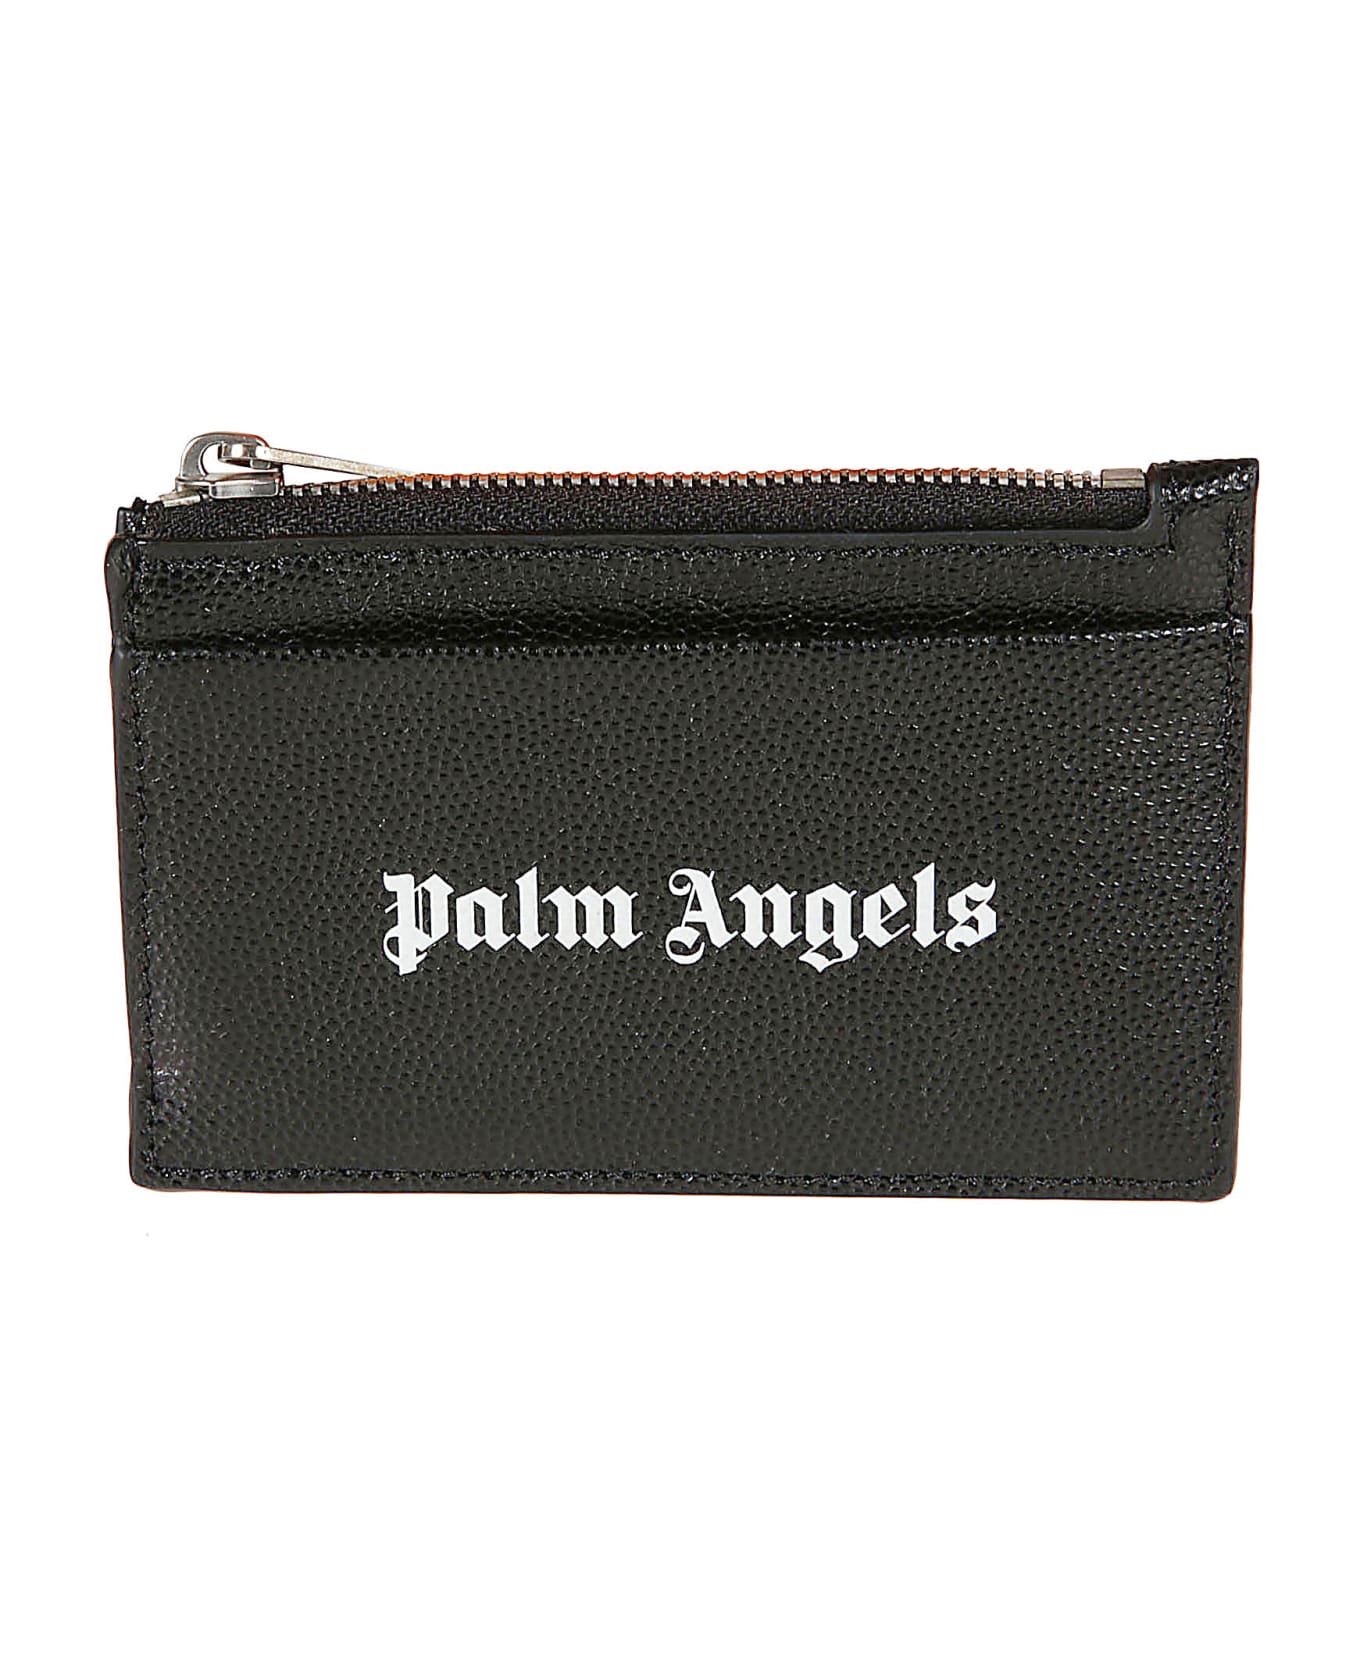 Palm Angels Zip Card Holder - Caviar Black/White